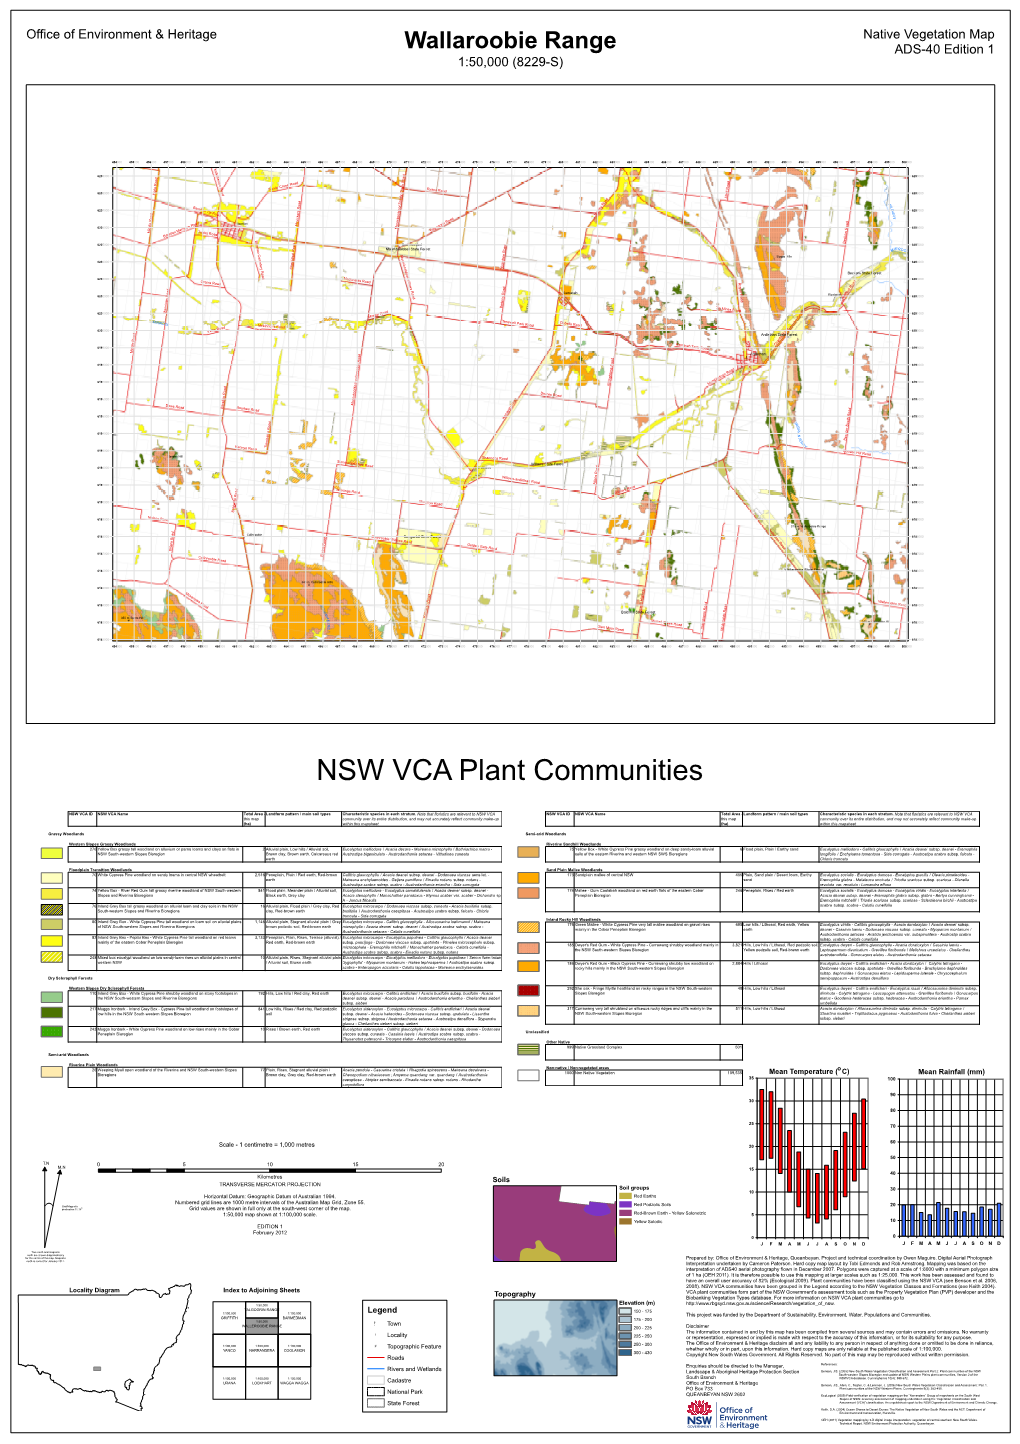 NSW VCA Plant Communities